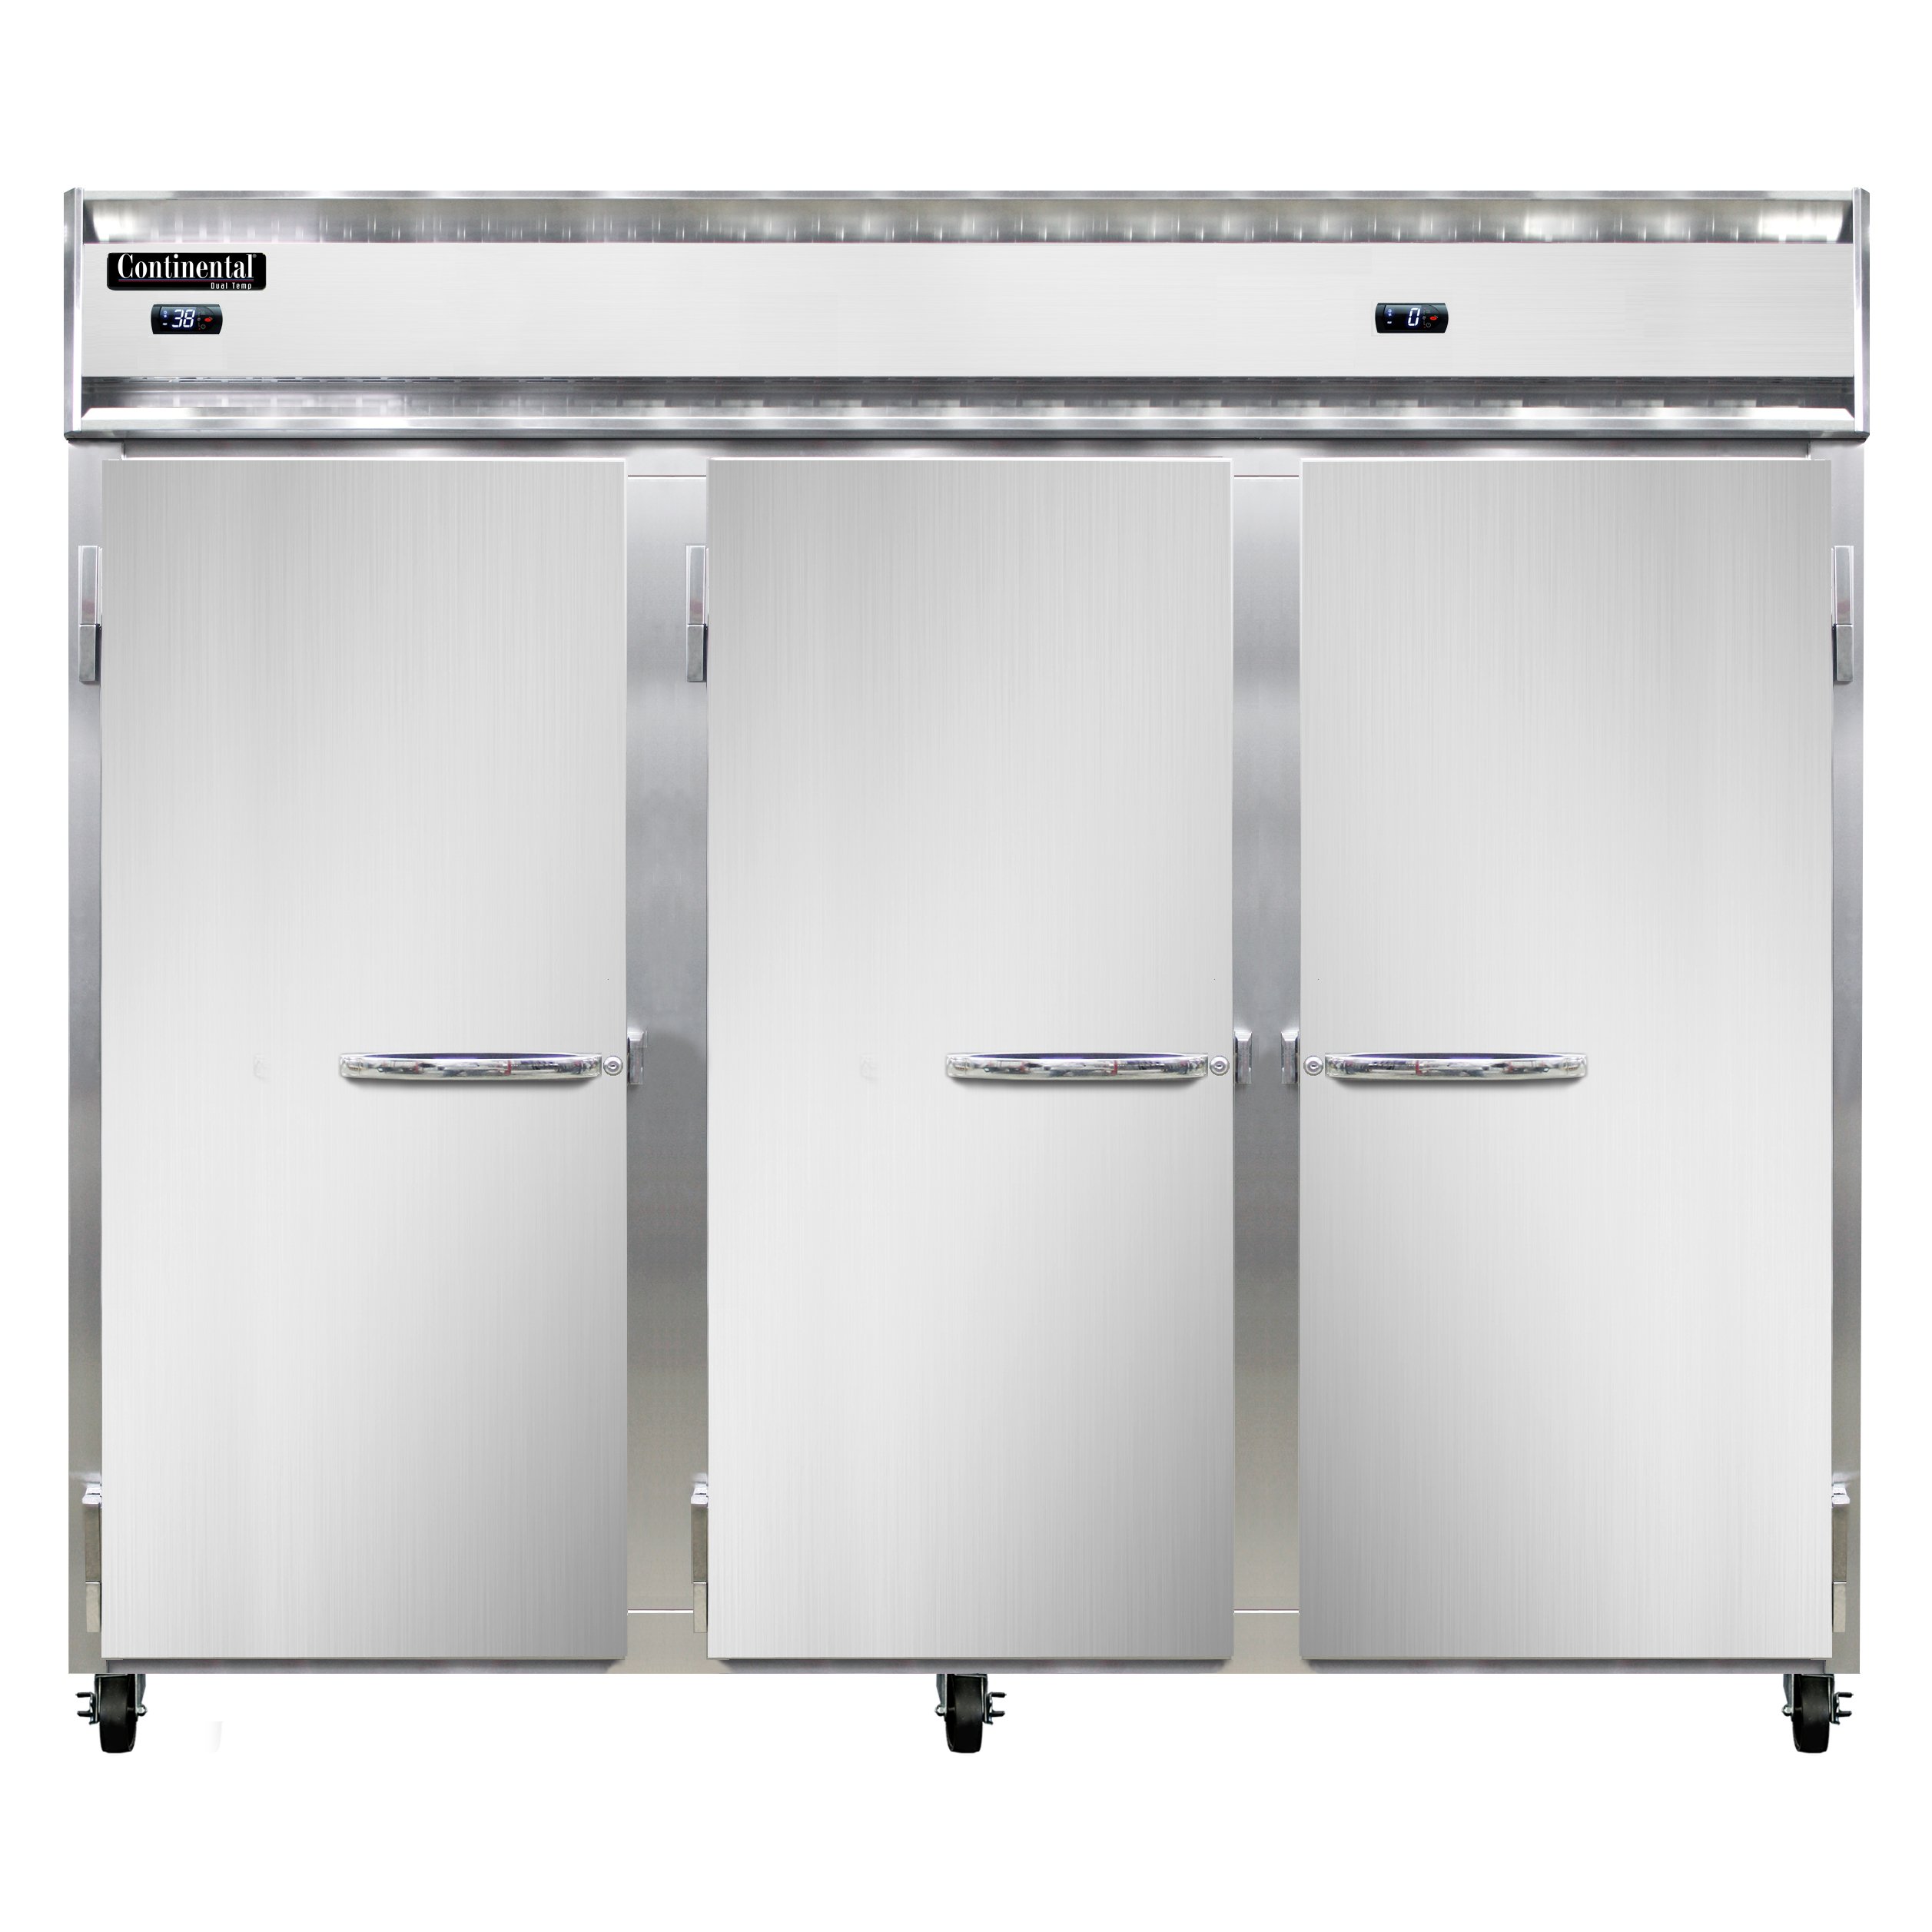 Continental Refrigerator 3RFFEN 85″ 3-Section Reach-In Refrigerator Freezer w/ 3 Solid Doors